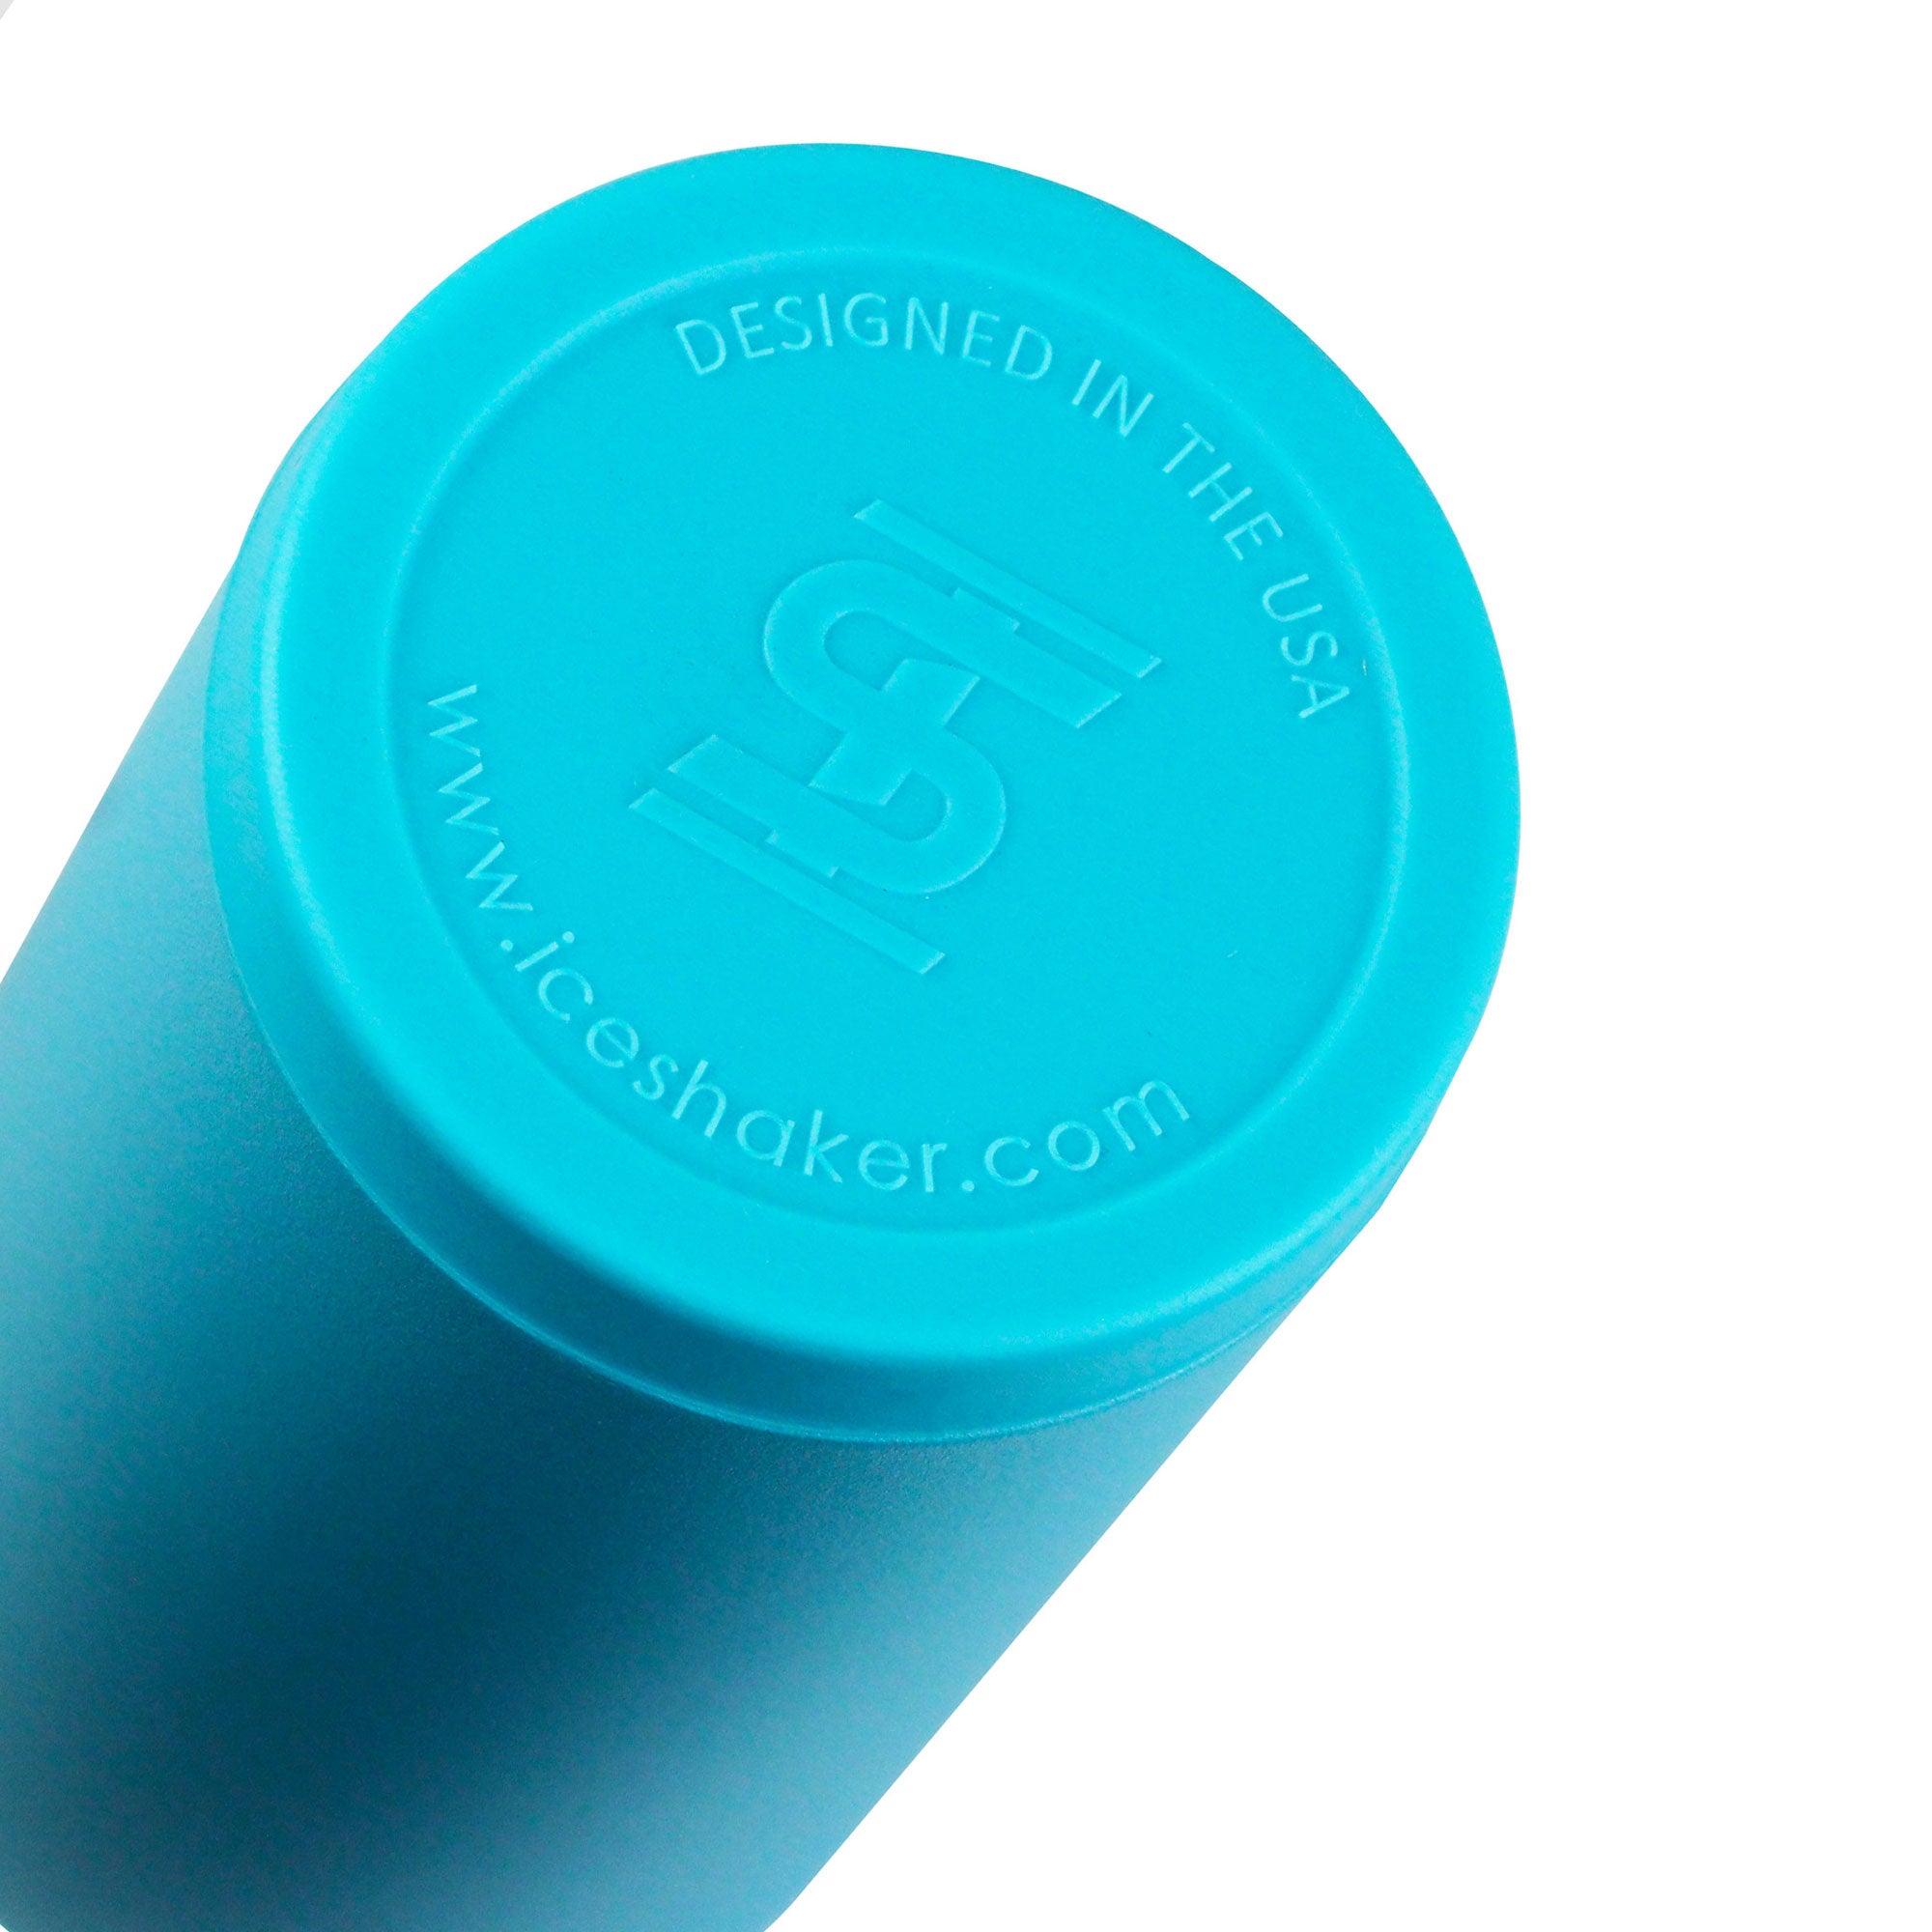  Coldest Shaker Bottle - Protein Blender Shaker Cup for Protein  Mixes Insulated Chug lid Bottle,Bottle Fits Sip Cirkul Lid (26 oz, Galactic  Blue Glitter): Home & Kitchen